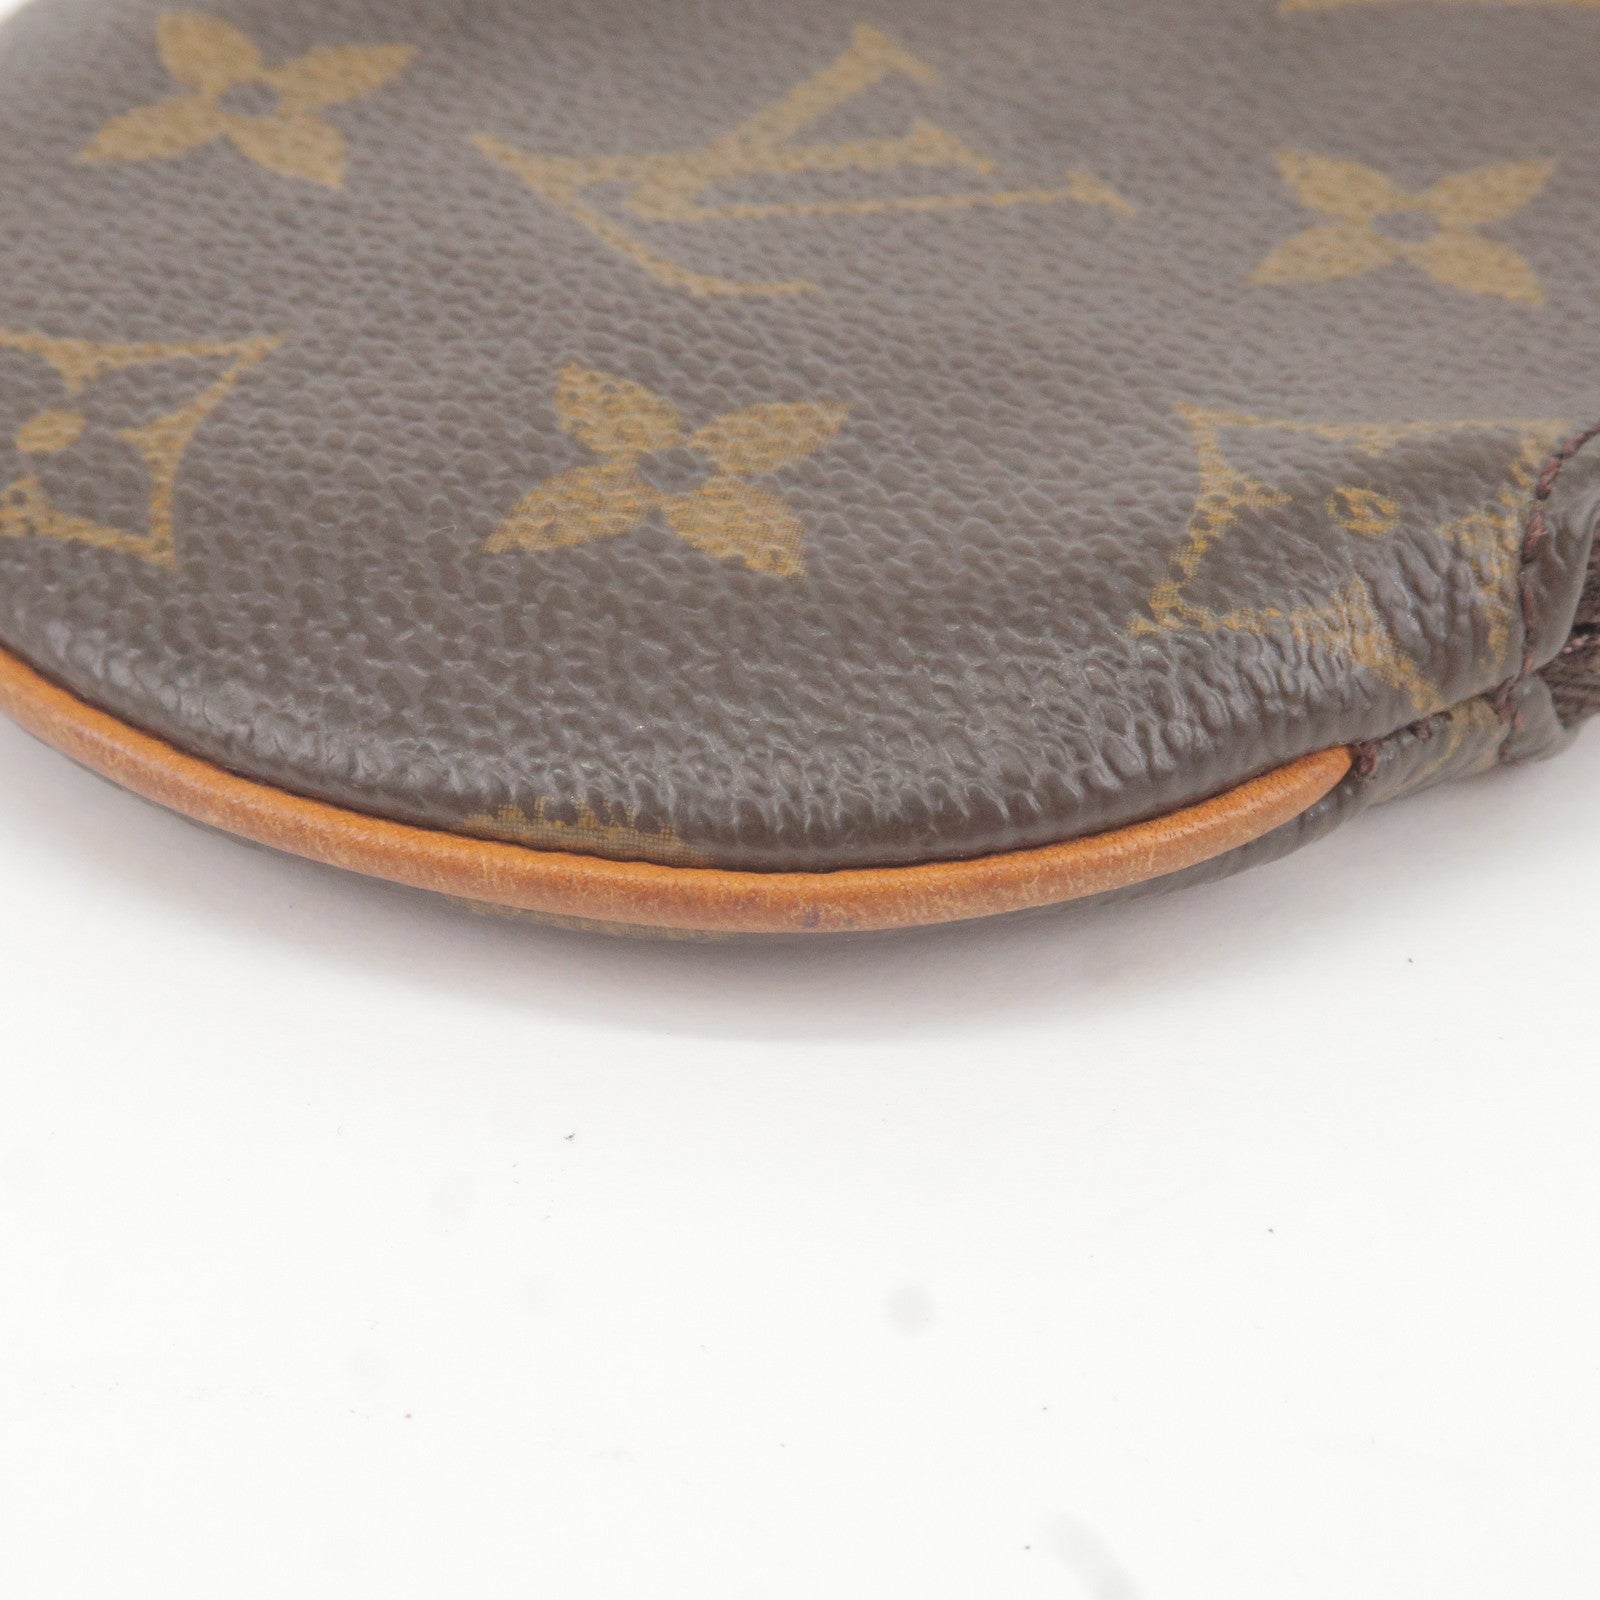 Louis-Vuitton-Monogram-Speedy-30-Hand-Bag-Boston-Bag-M41526 – dct